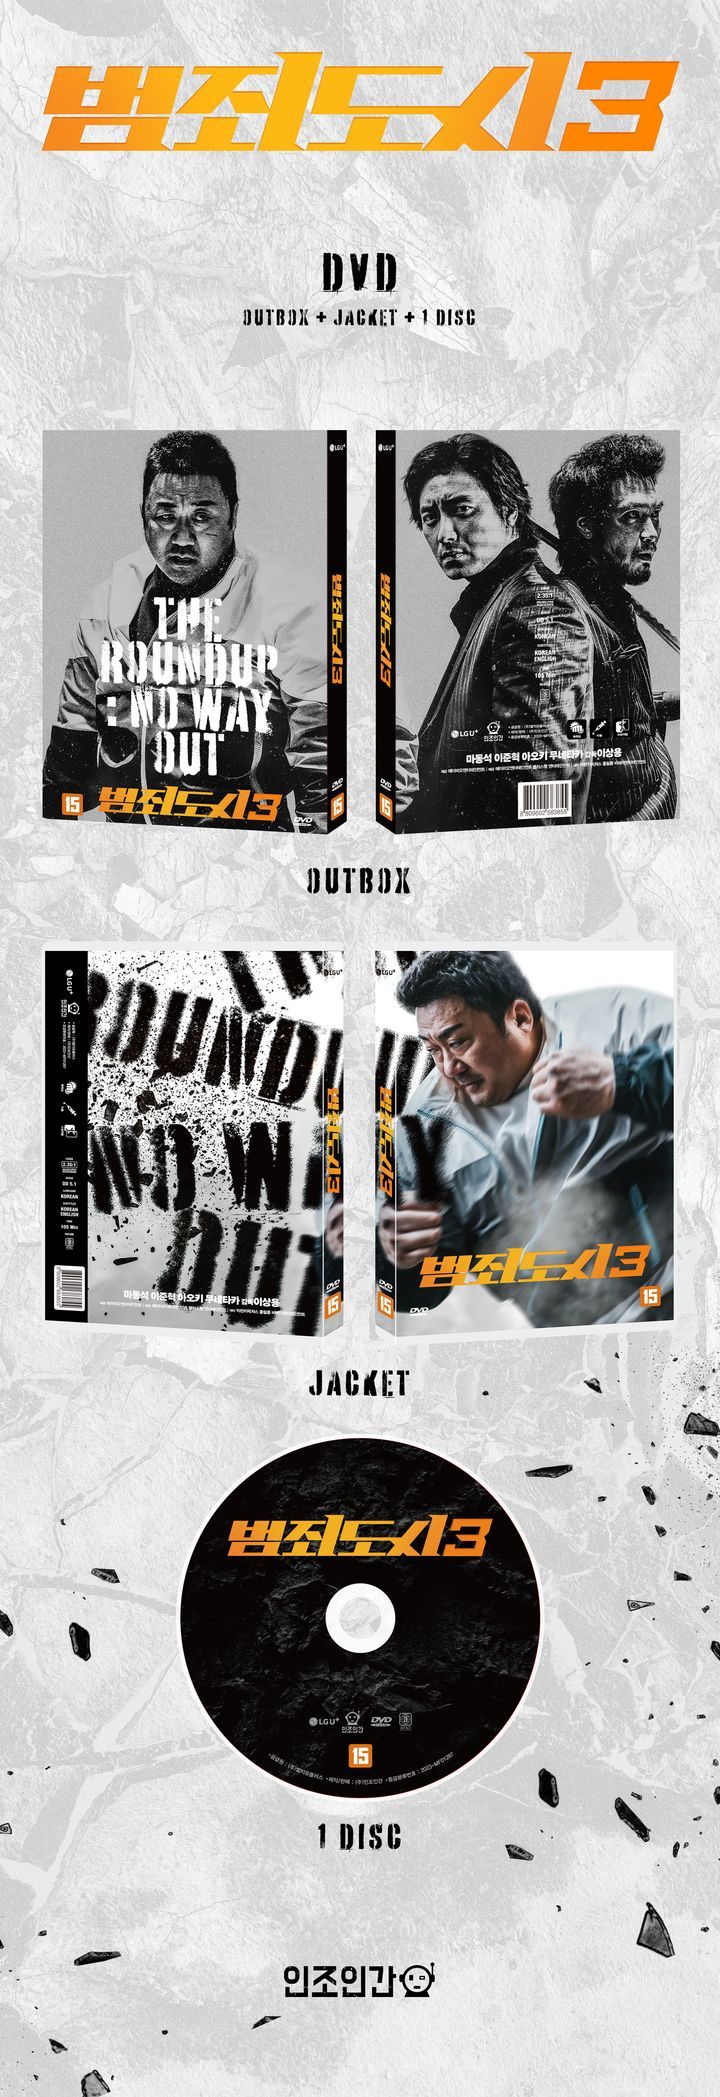 YESASIA: The Roundup: No Way Out (DVD) (Korea Version) DVD - Ma Dong Seok,  Lee Bum Soo, Injoingan - Korea Movies & Videos - Free Shipping